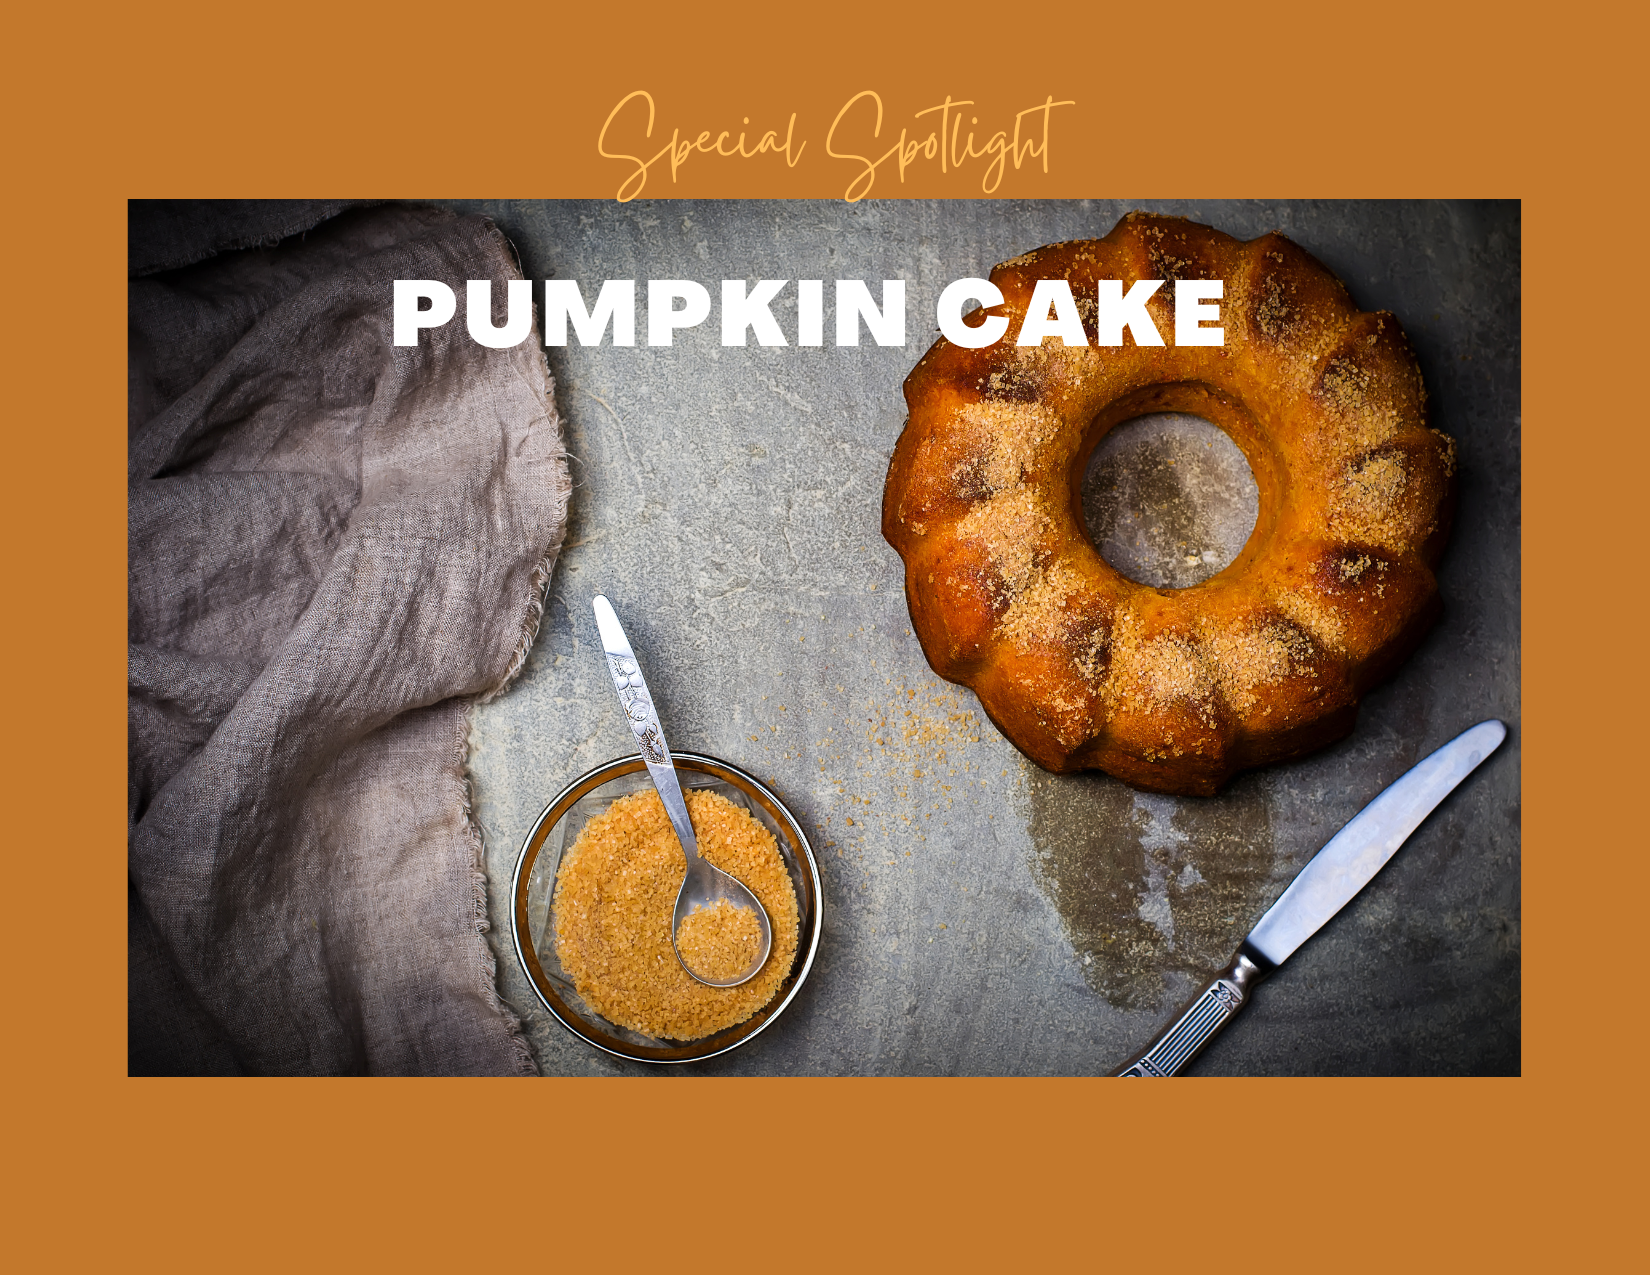 Recipe for Pumpkin Cake from The Vista